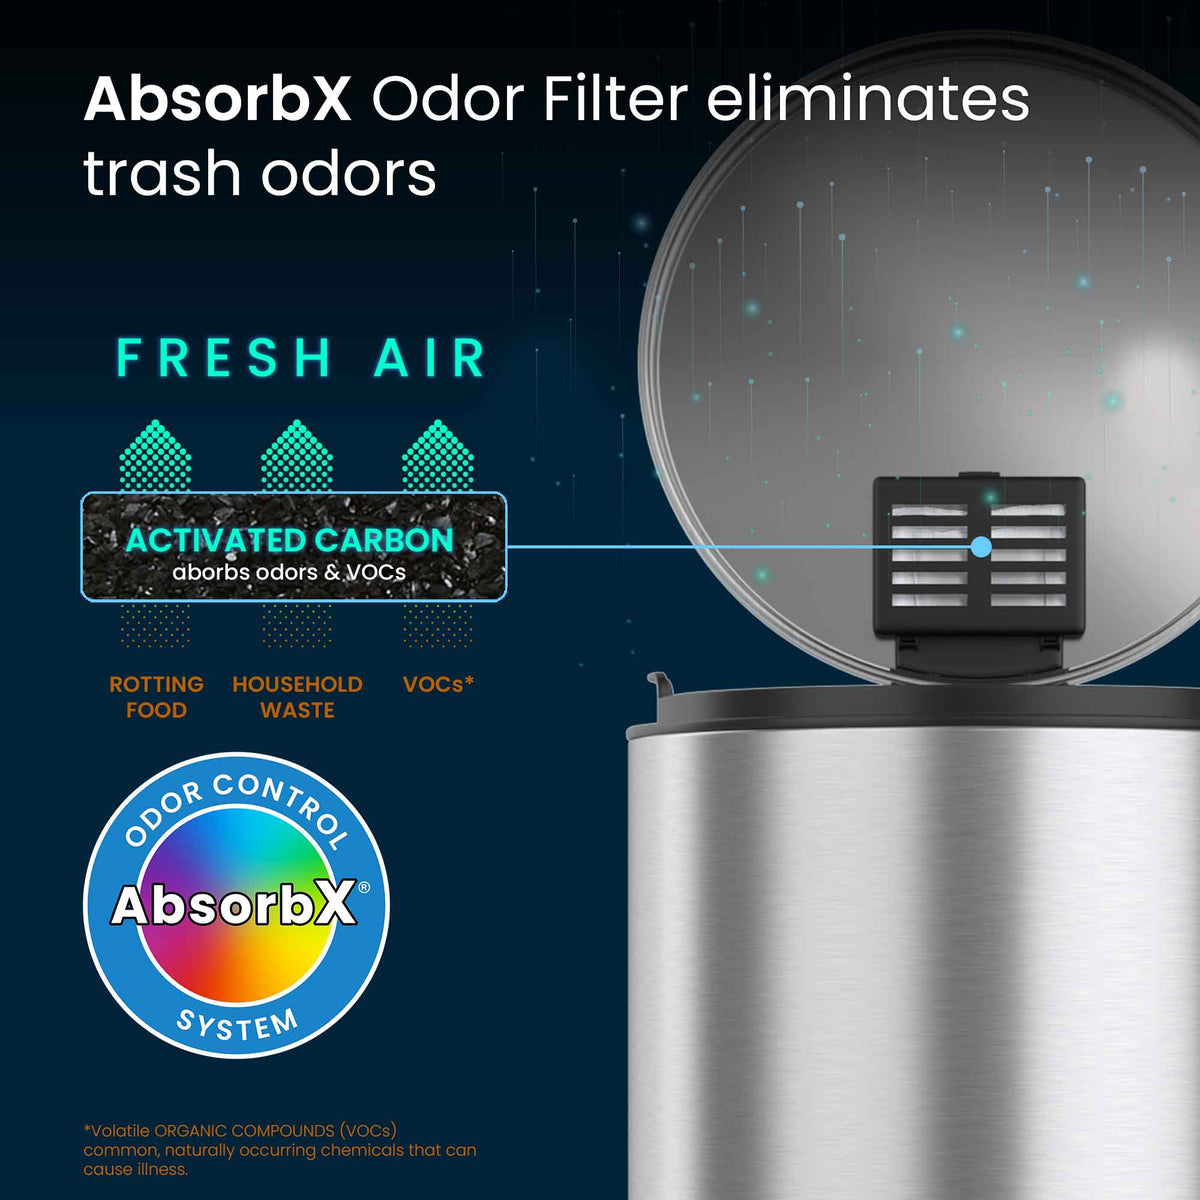 1.3 Gallon / 4.9 Liter SoftStep Round Step Pedal Trash Can AbsorbX Odor Filter eliminates trash odors